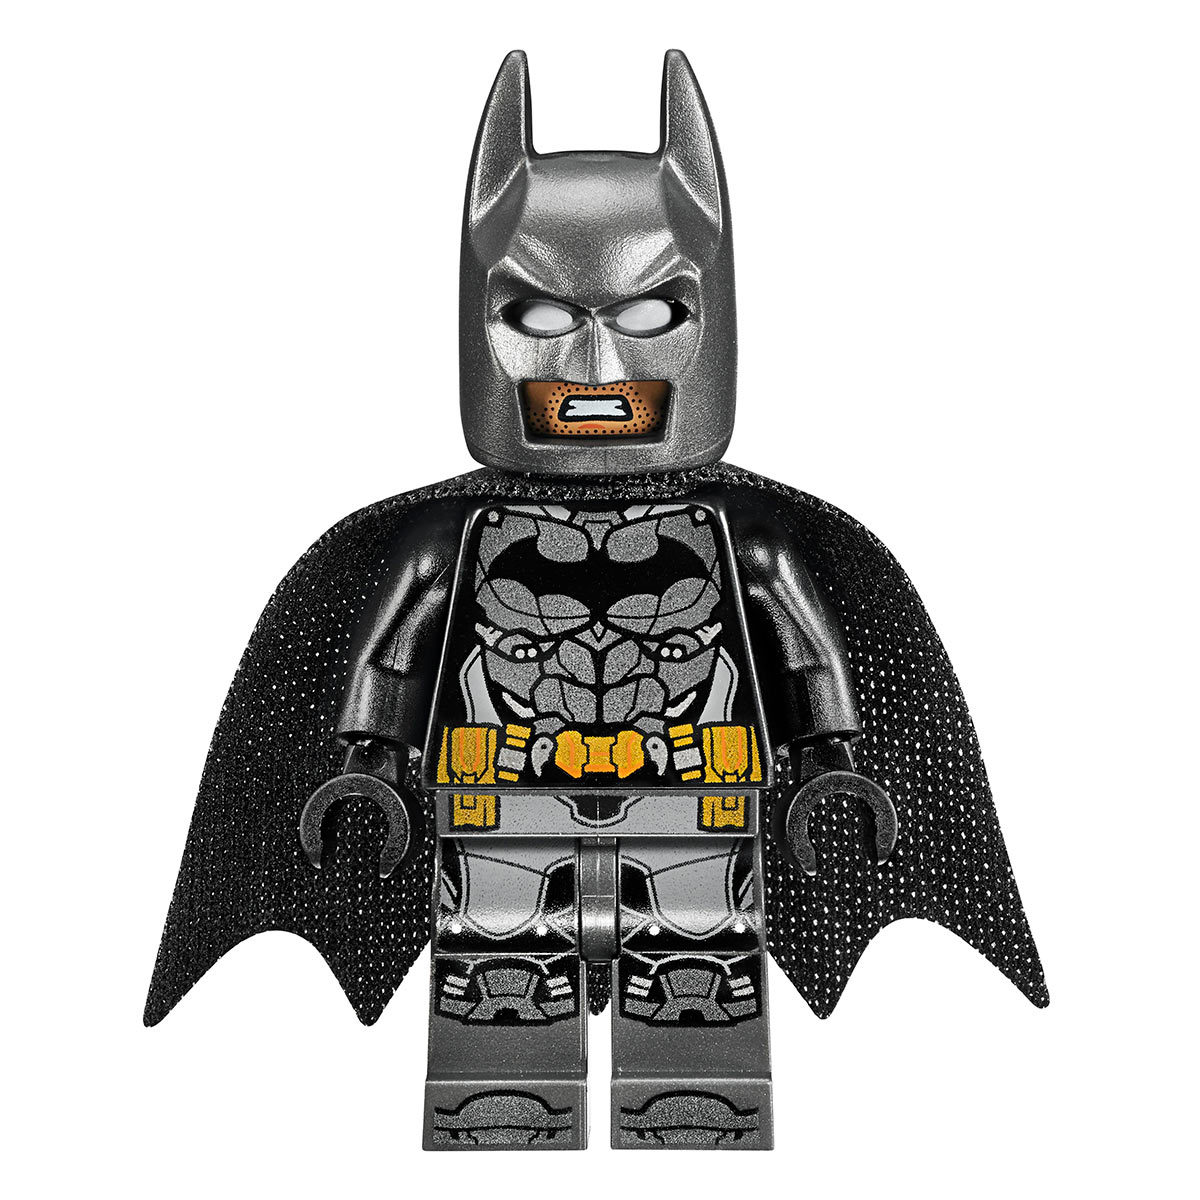 LEGO DC Comics Batman  App-Controlled Batmobile -  Model 76112 (8+ Years)